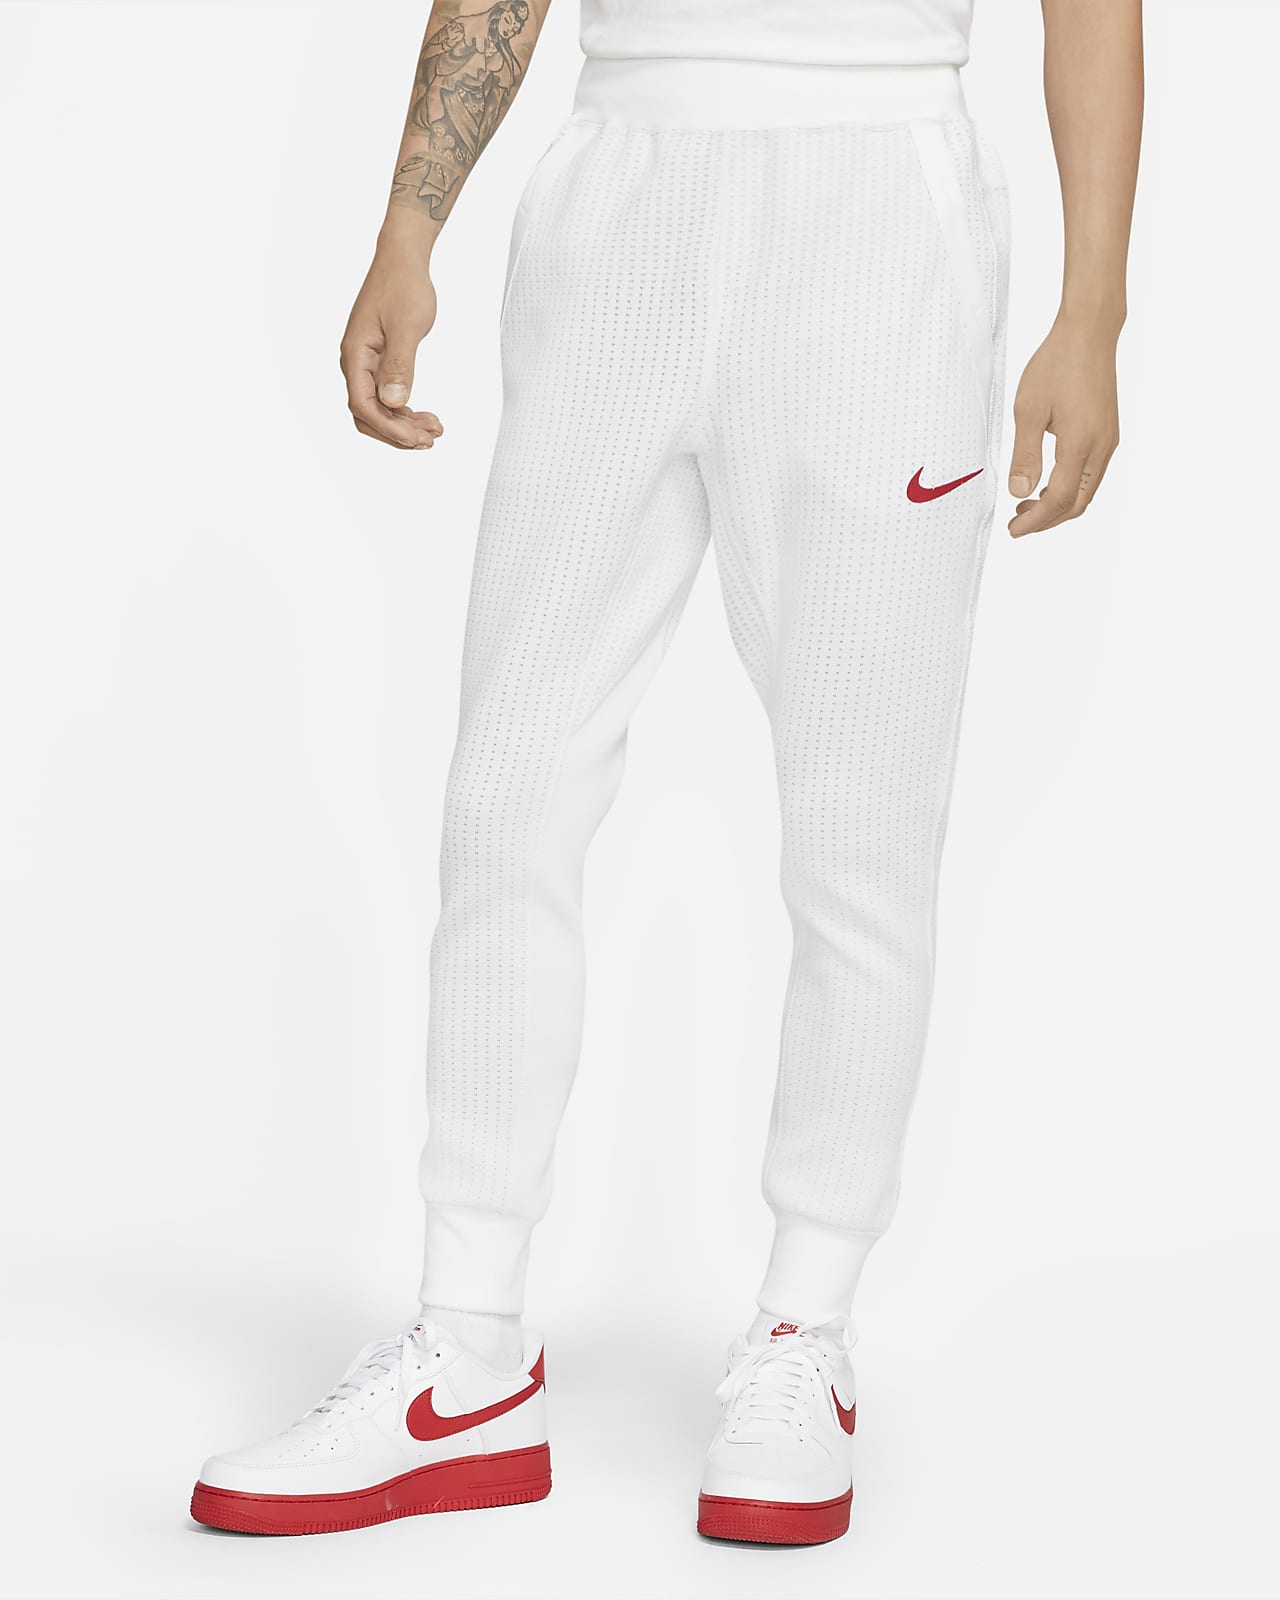 Nike公式 ナイキ スポーツウェア メンズ パンツ オンラインストア 通販サイト